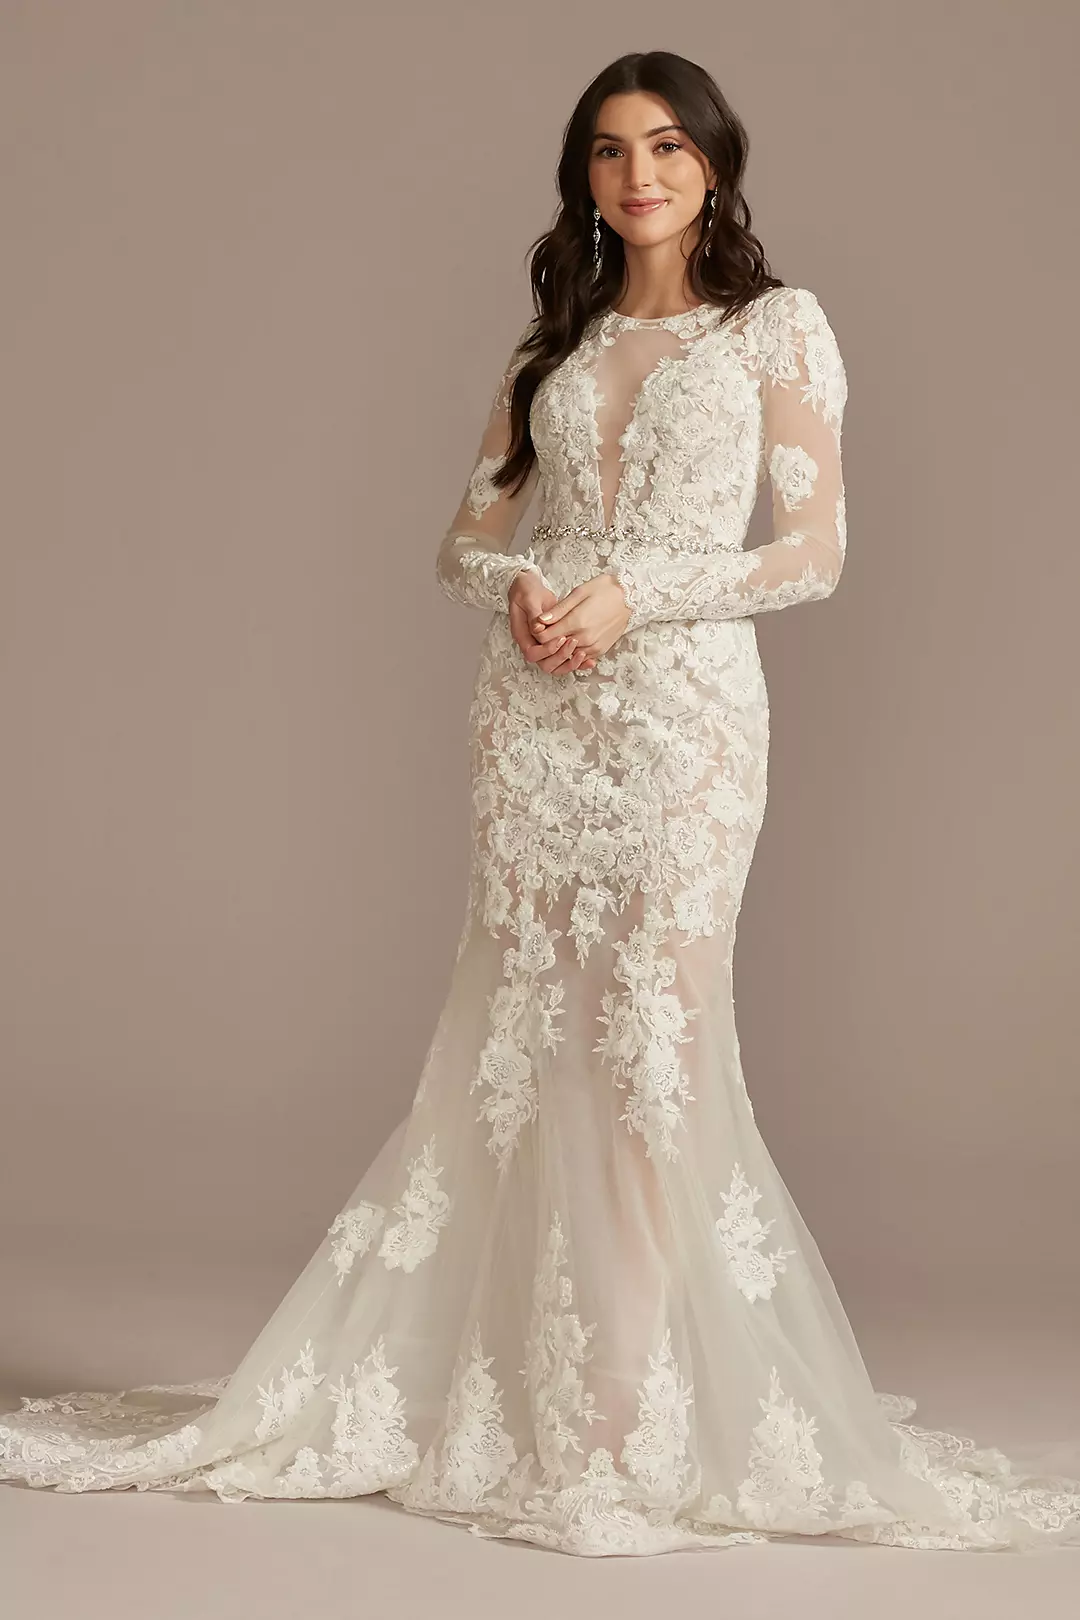 Lace Wedding Bodysuit, Bridal Bodysuit With Long Sleeves, Wedding